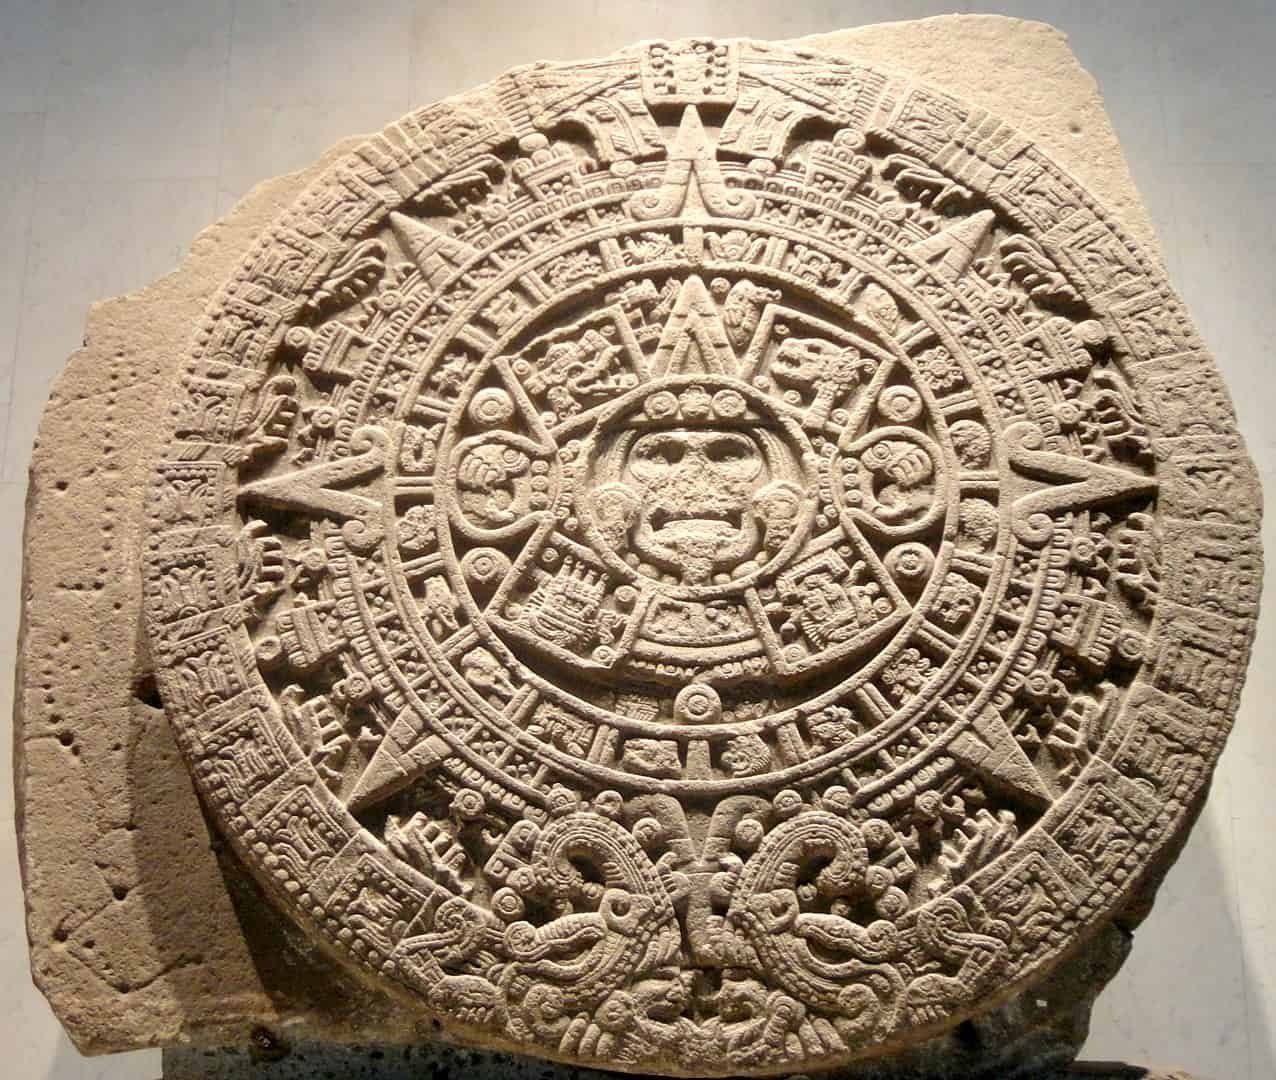 80 Aztec Facts About the Last Native Mesoamerican Civilization